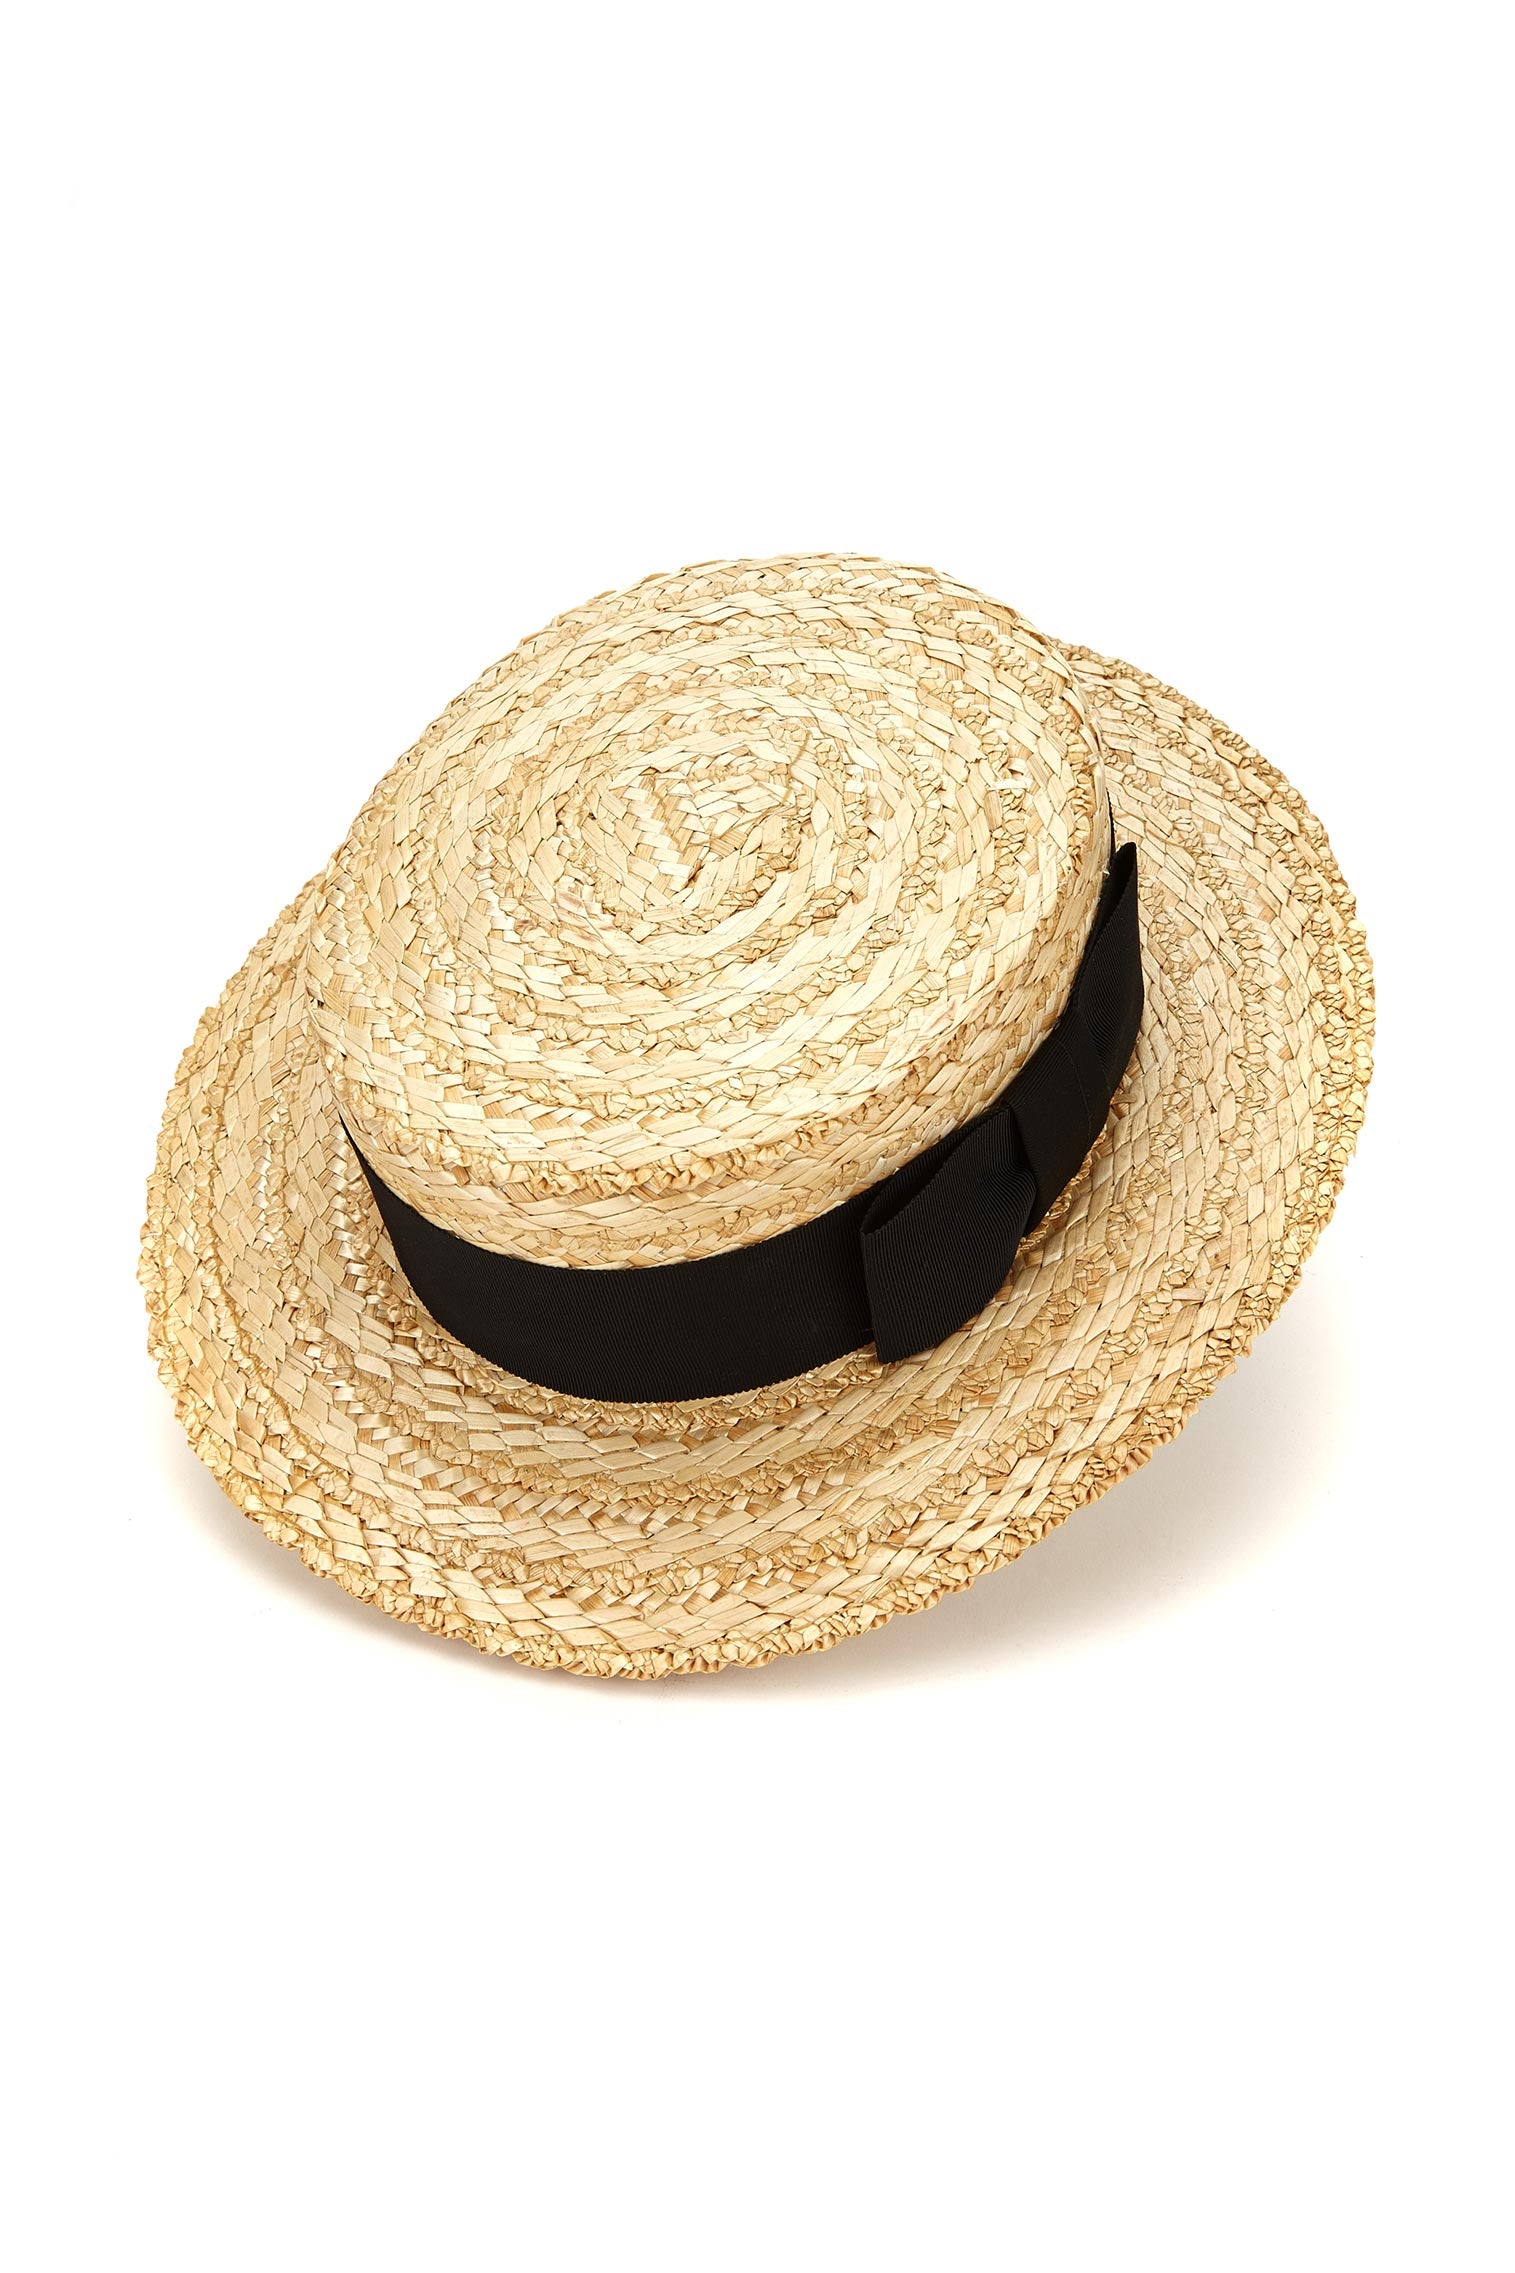 Classic Boater - Panamas & Sun Hats for Women - Lock & Co. Hatters London UK